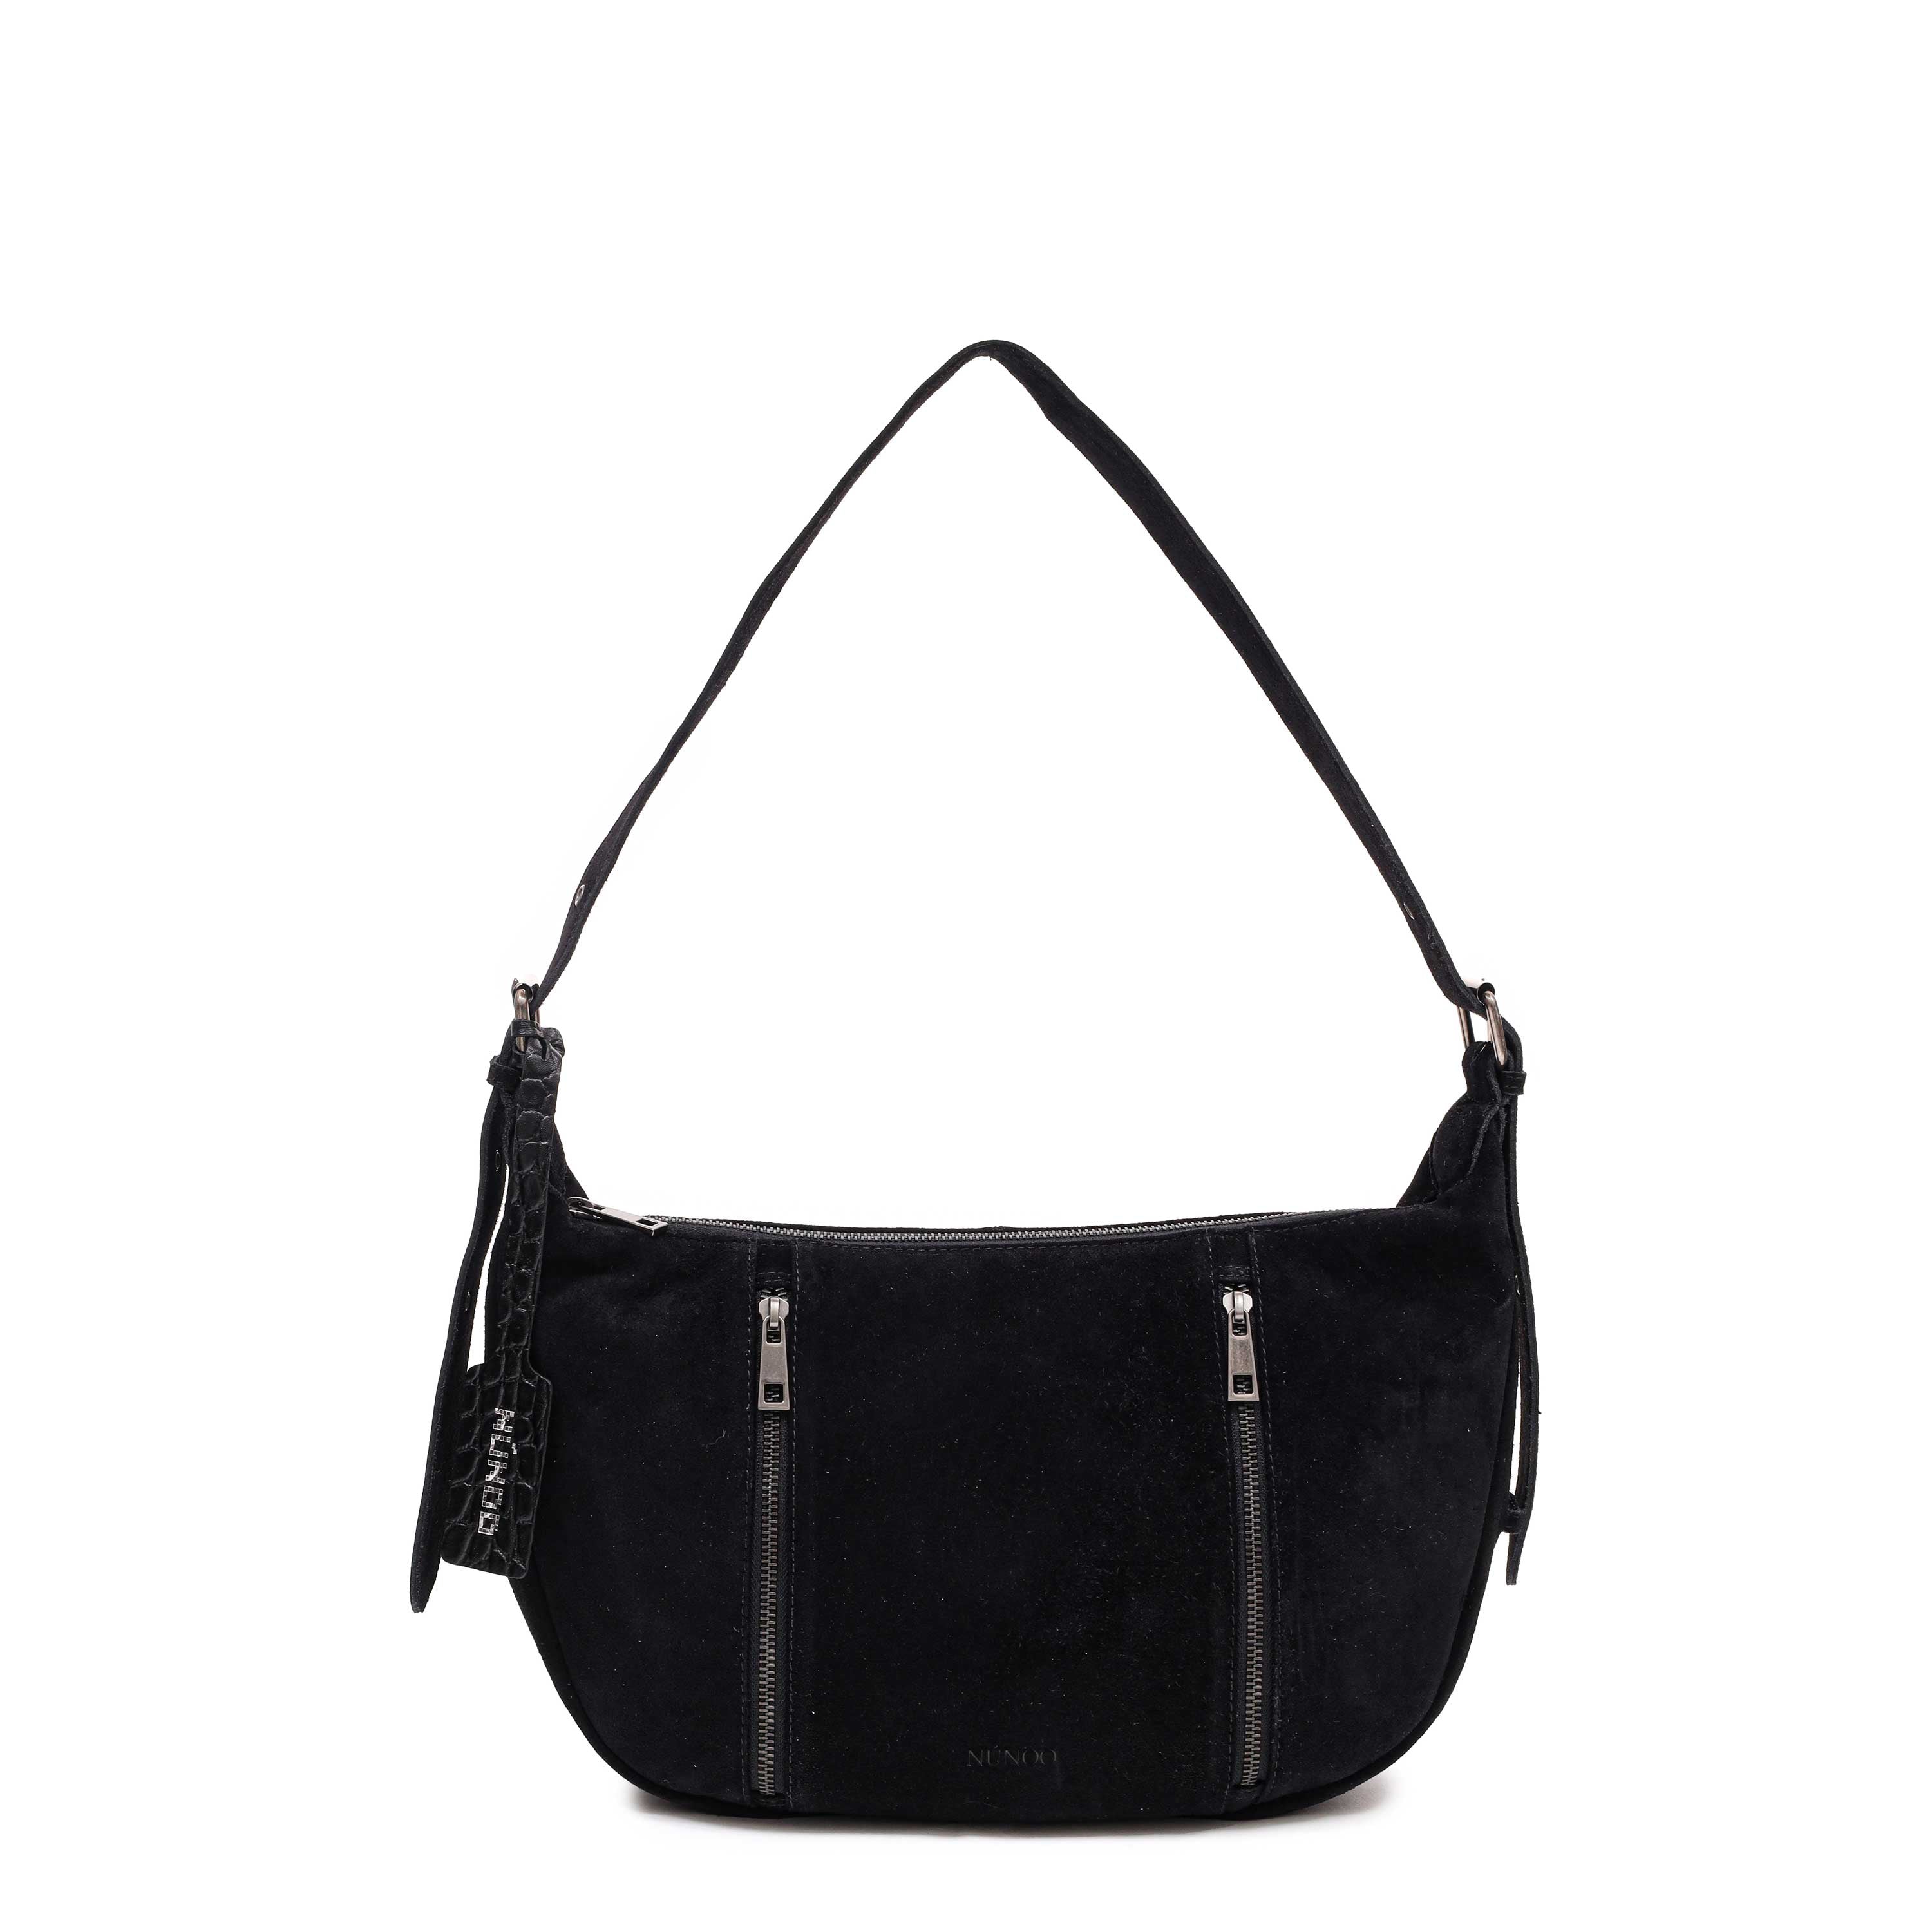 Stella McCartney Bags | Handbags & Cross Body Bags | Flannels